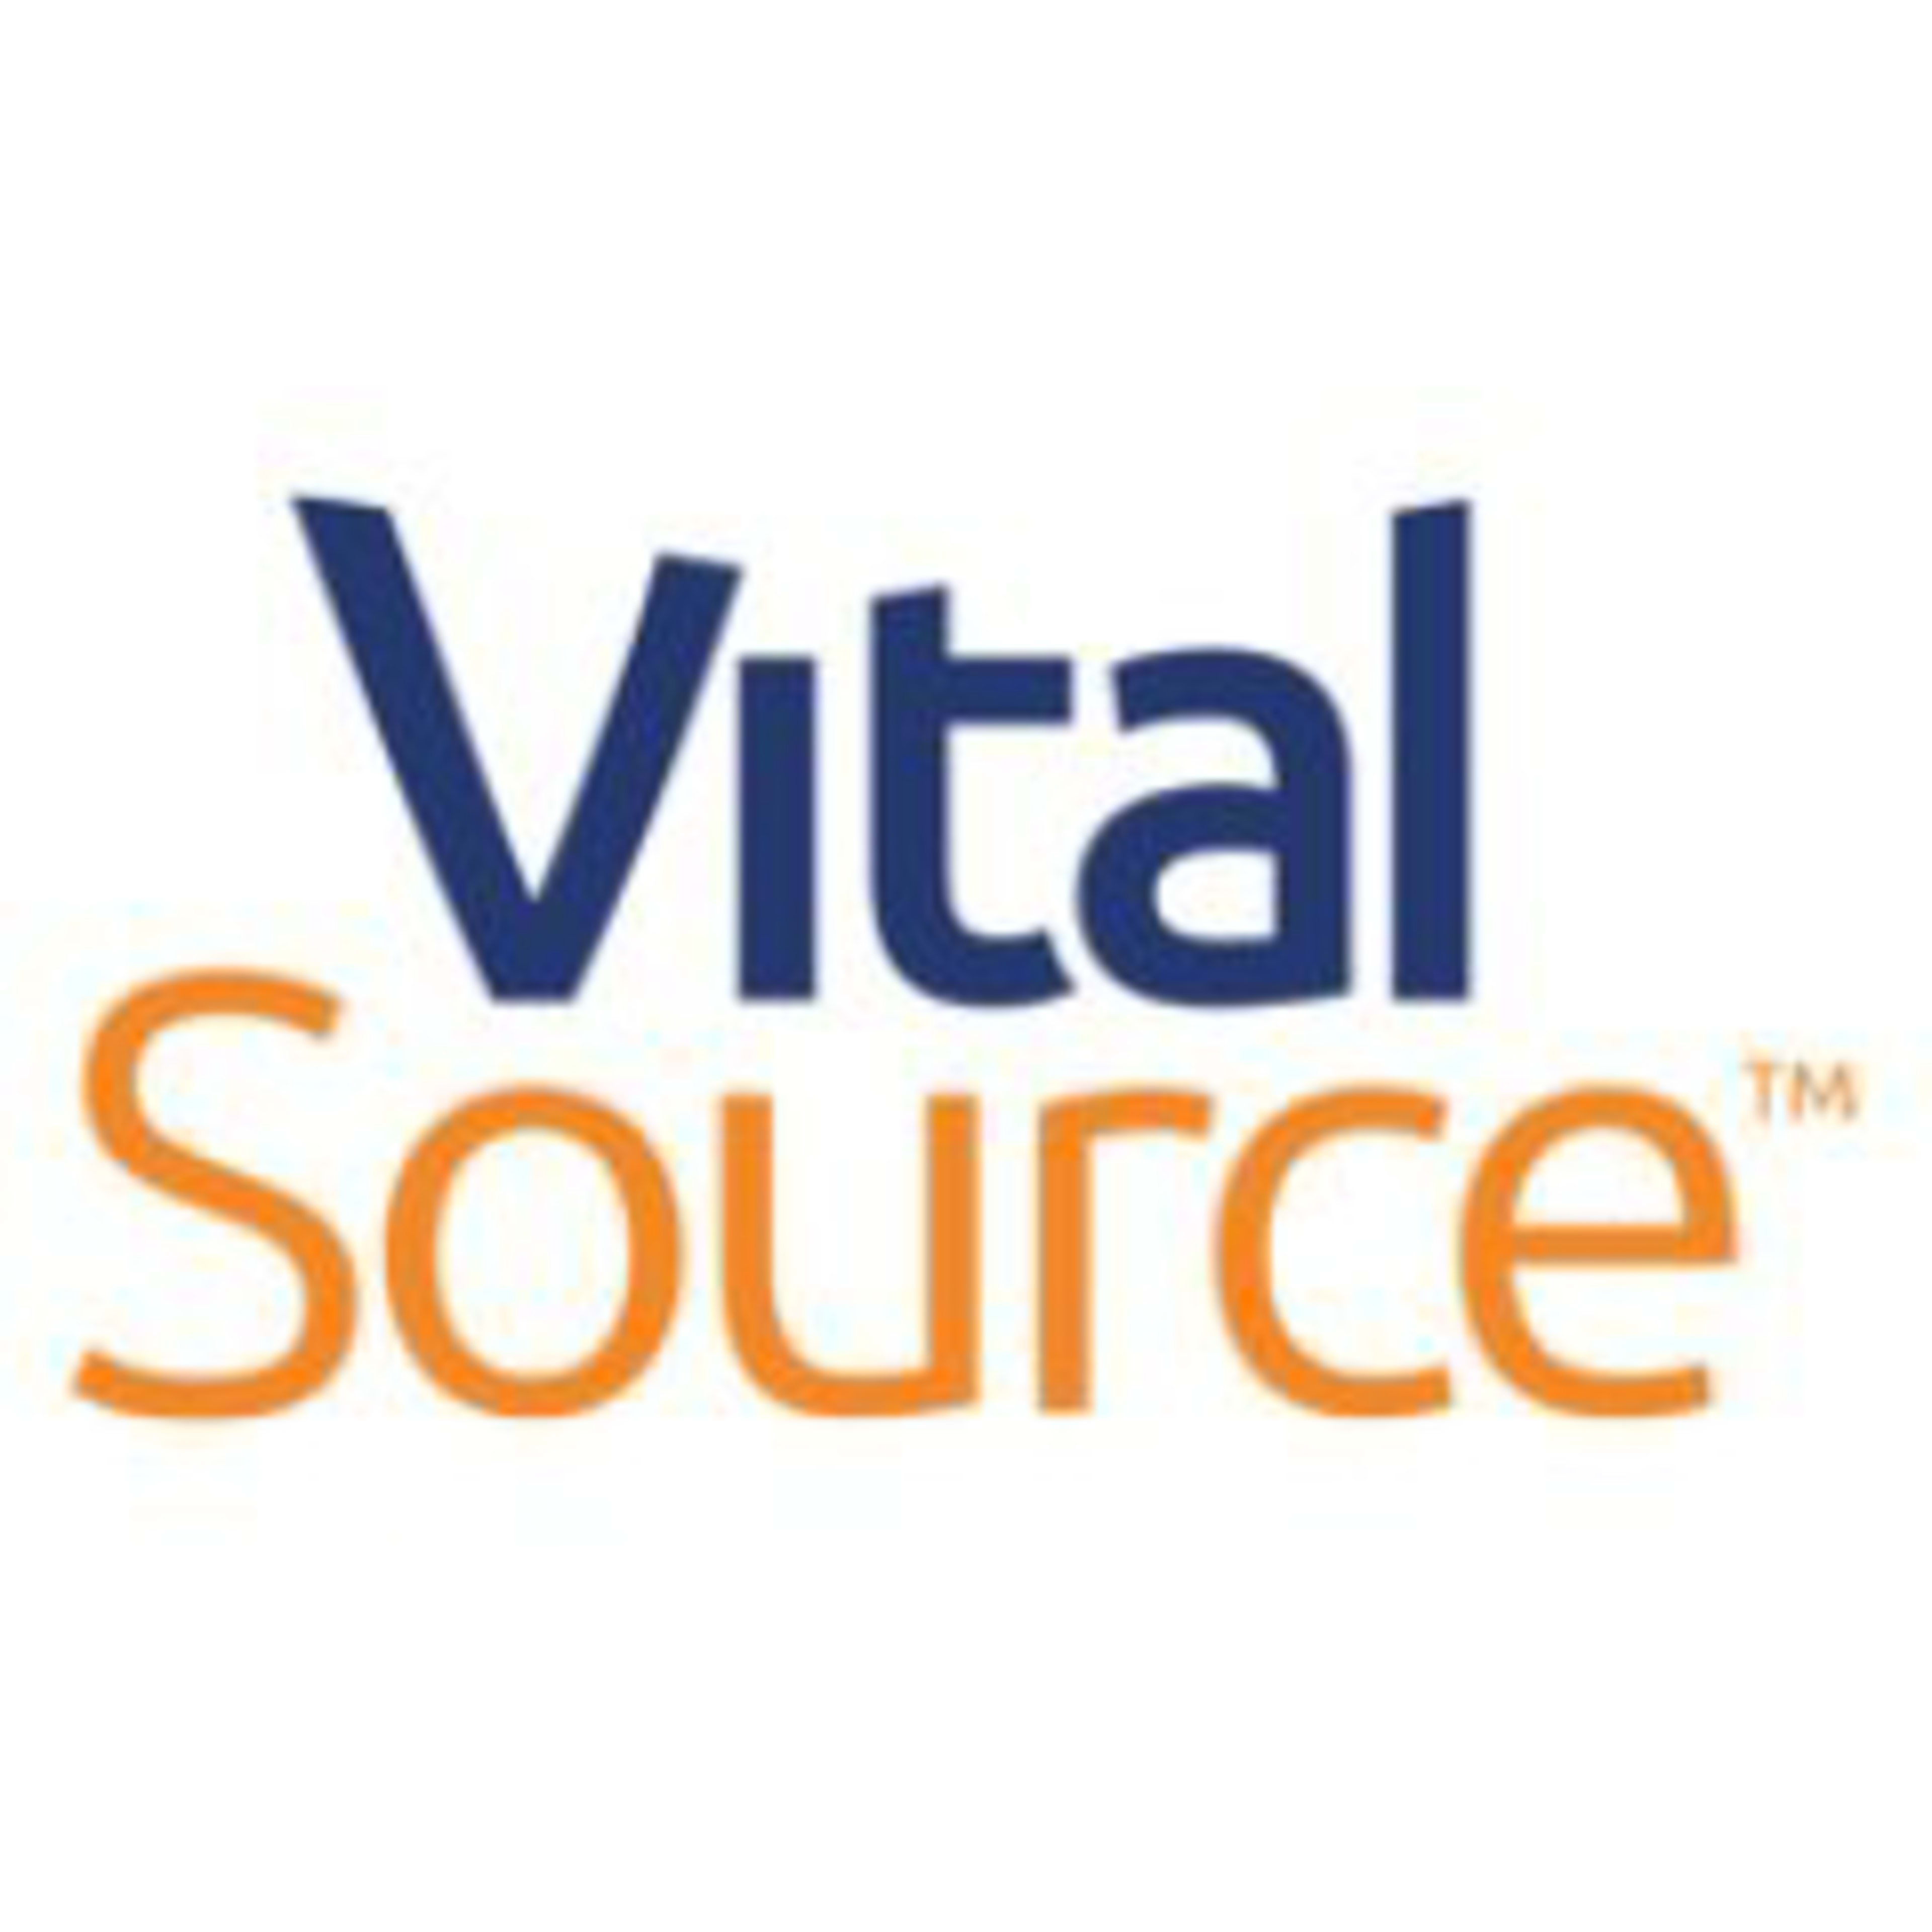 VitalSource